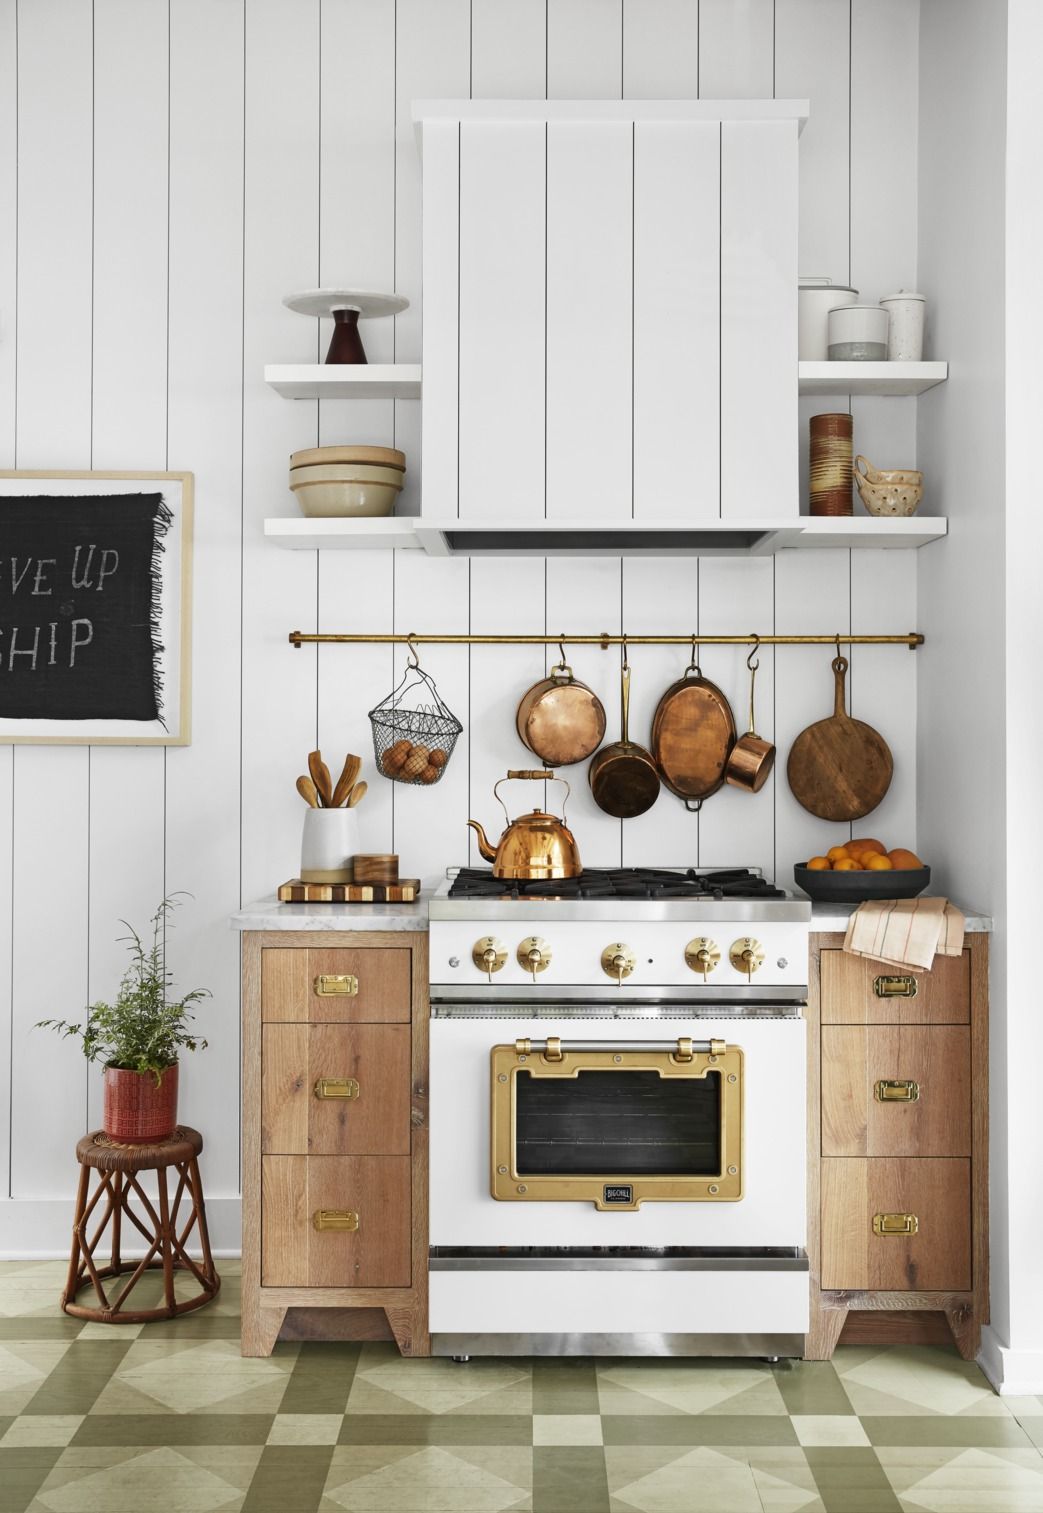 18 Best Kitchen Design Ideas   Pictures of Country Kitchen Decor